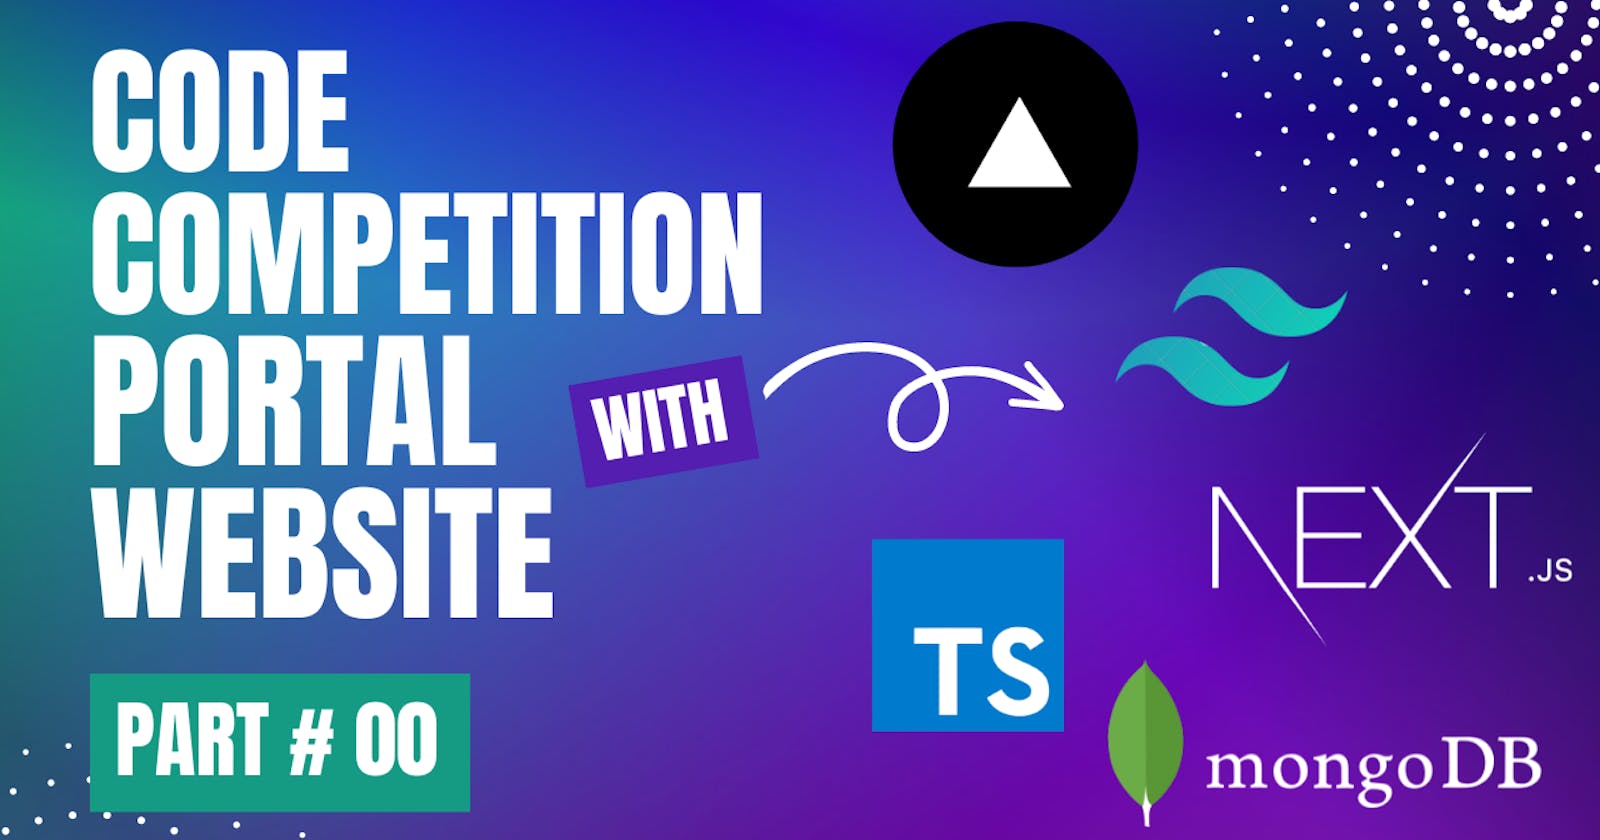 Building Code Competition Portal Website in Next JS - Part # 00